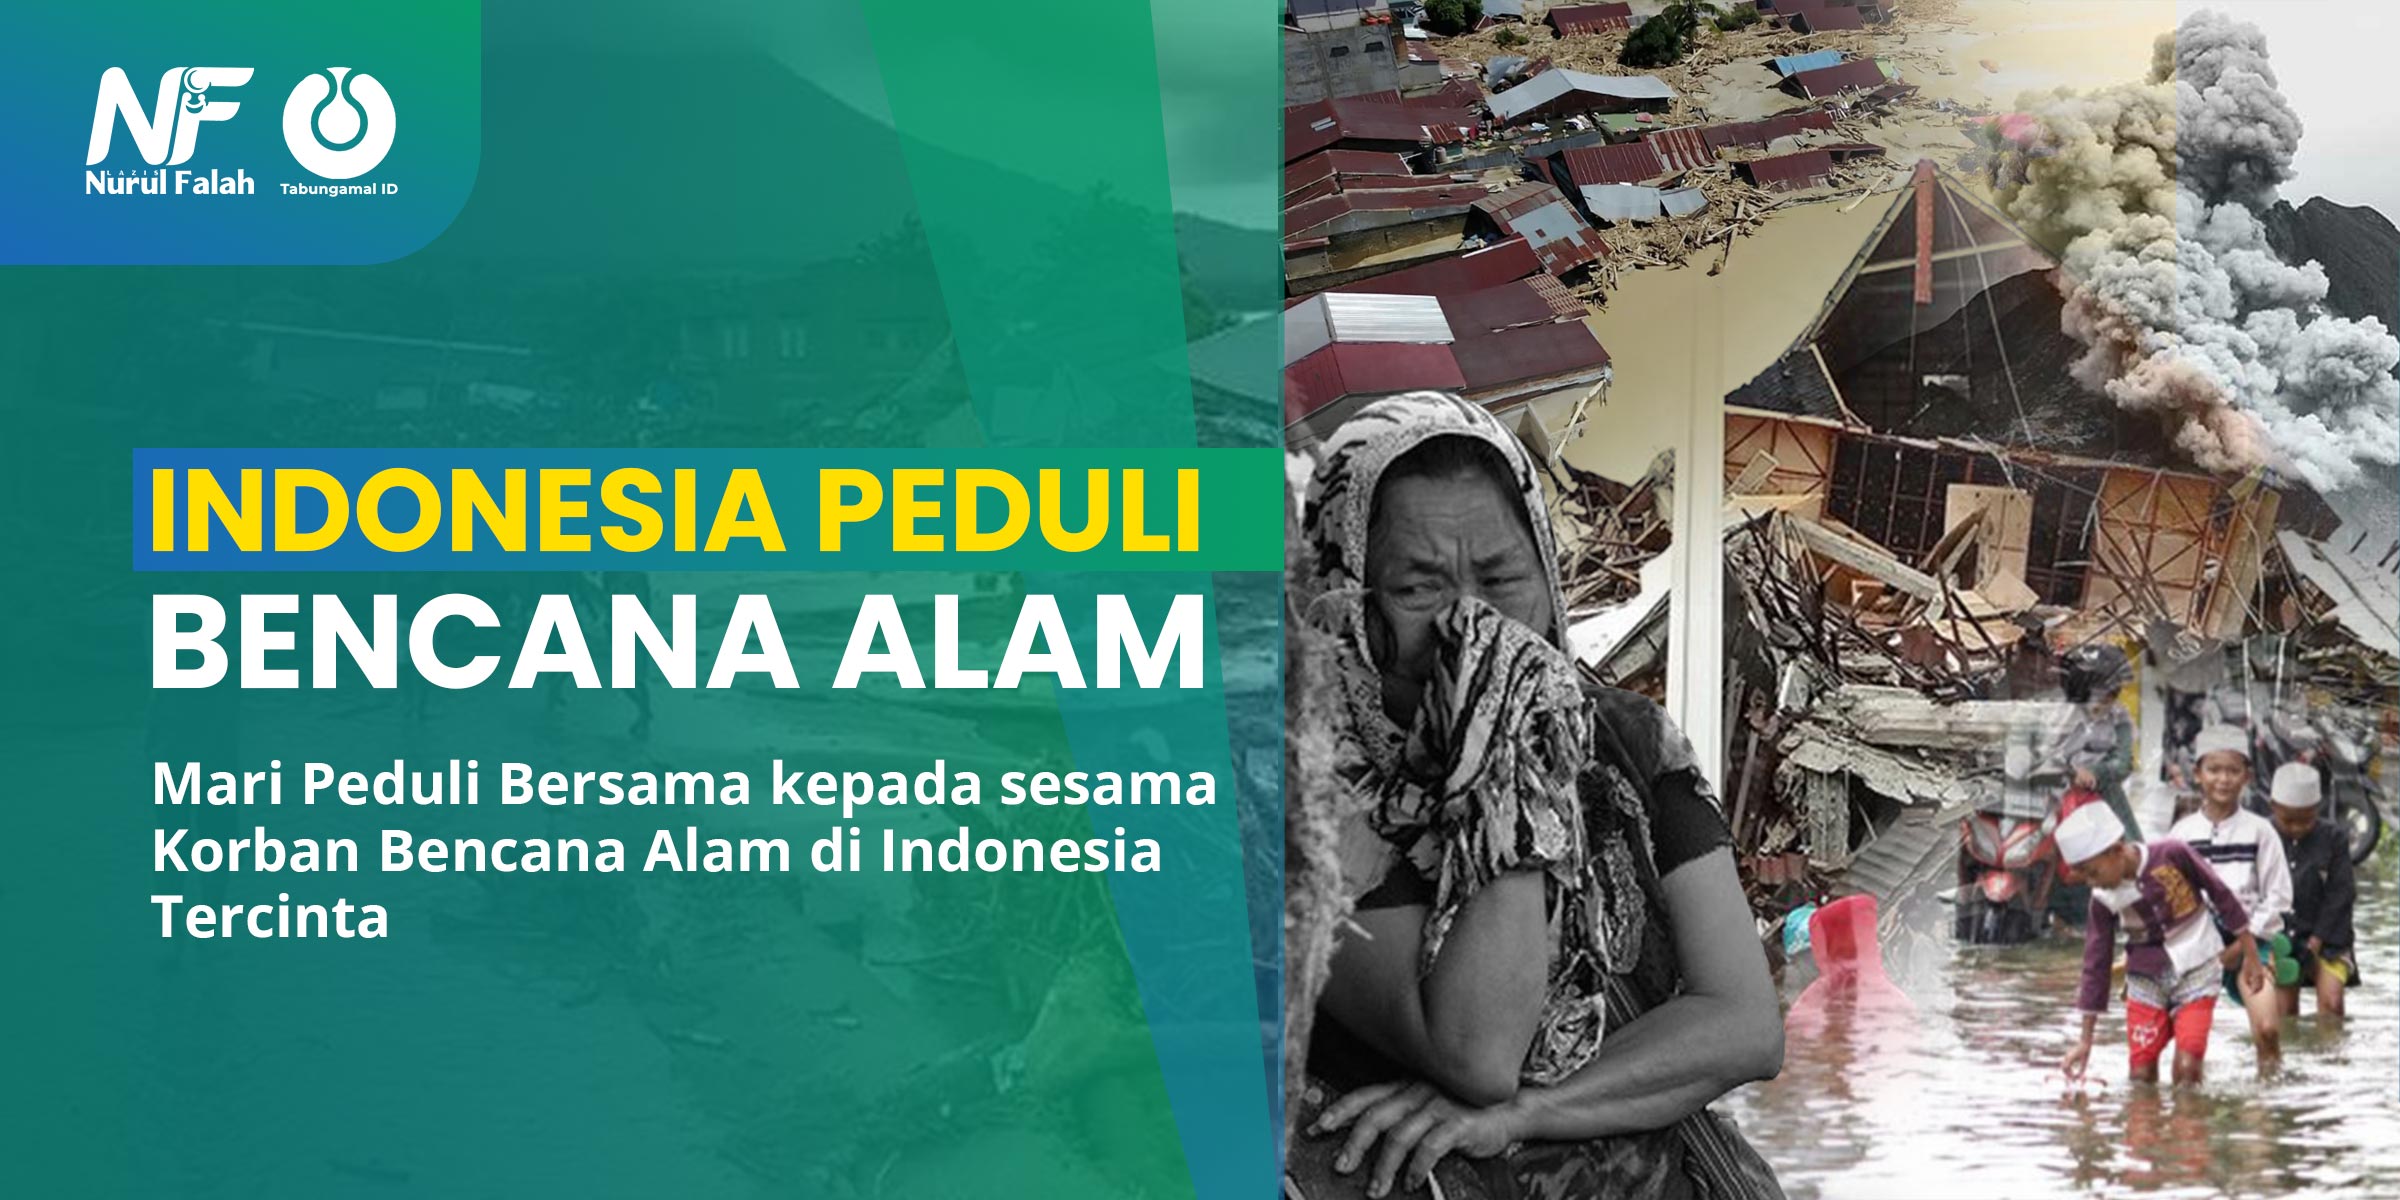 Aksi-Peduli-Bencana-Indonesia1663645210.jpg